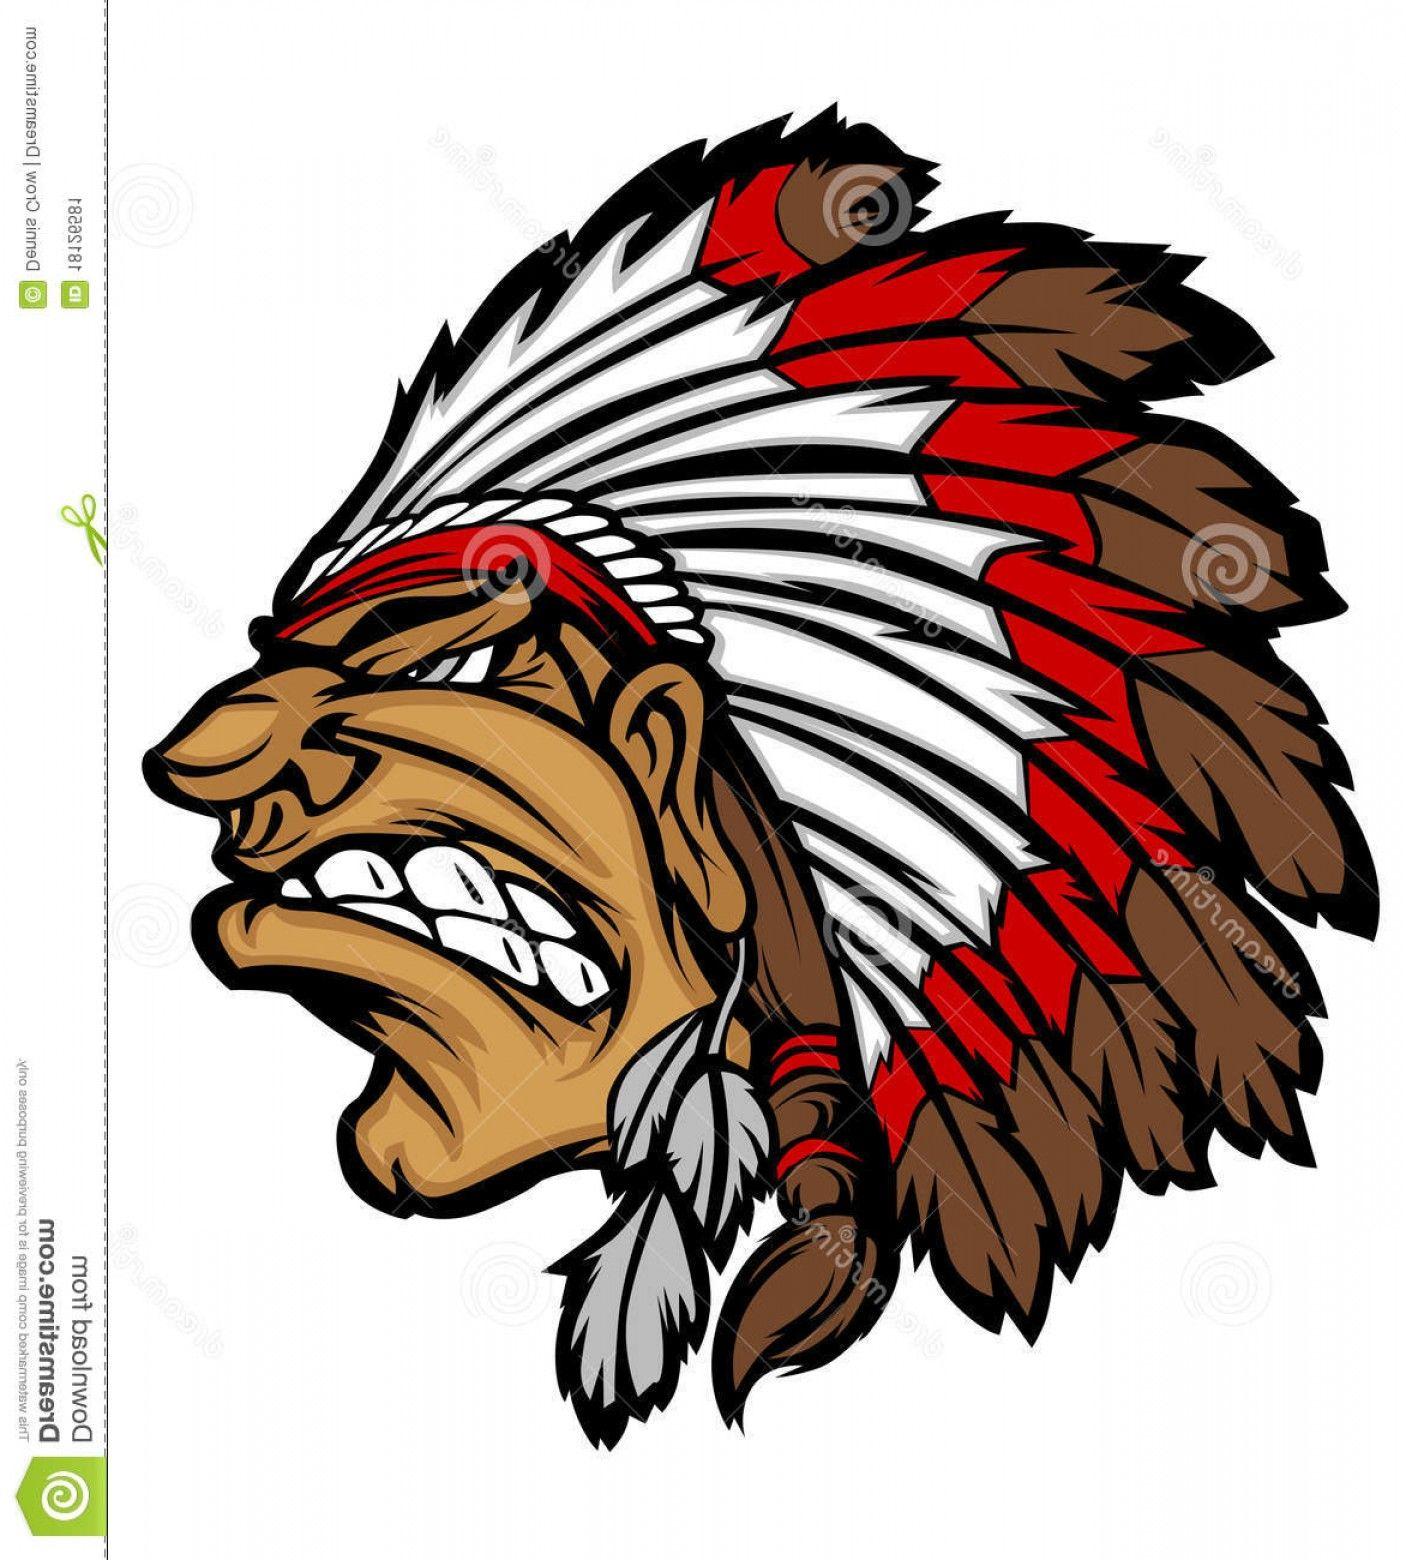 Indian Chief Logo - Stock Image Indian Chief Mascot Cartoon Vector Logo Image | SHOPATCLOTH